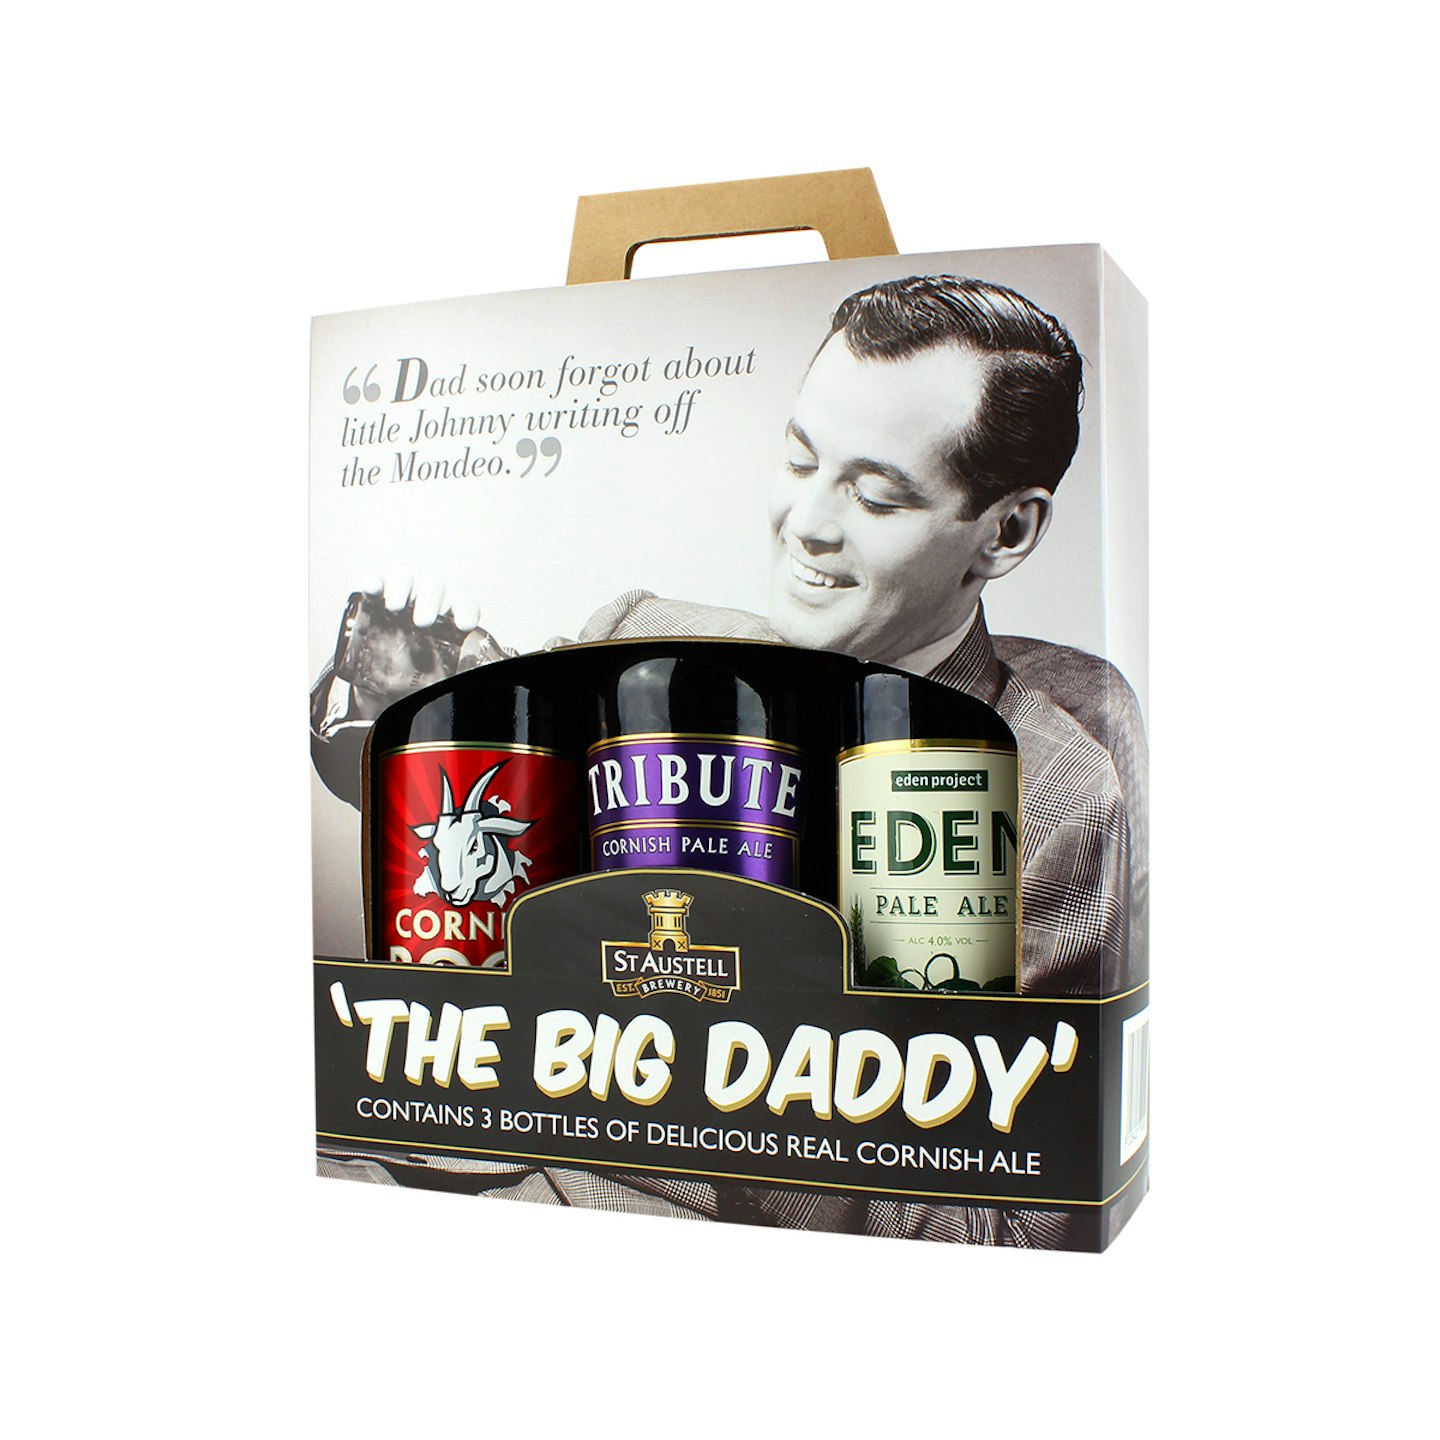 £14, Big Daddy, www.staustellbreweryshop.co.uk